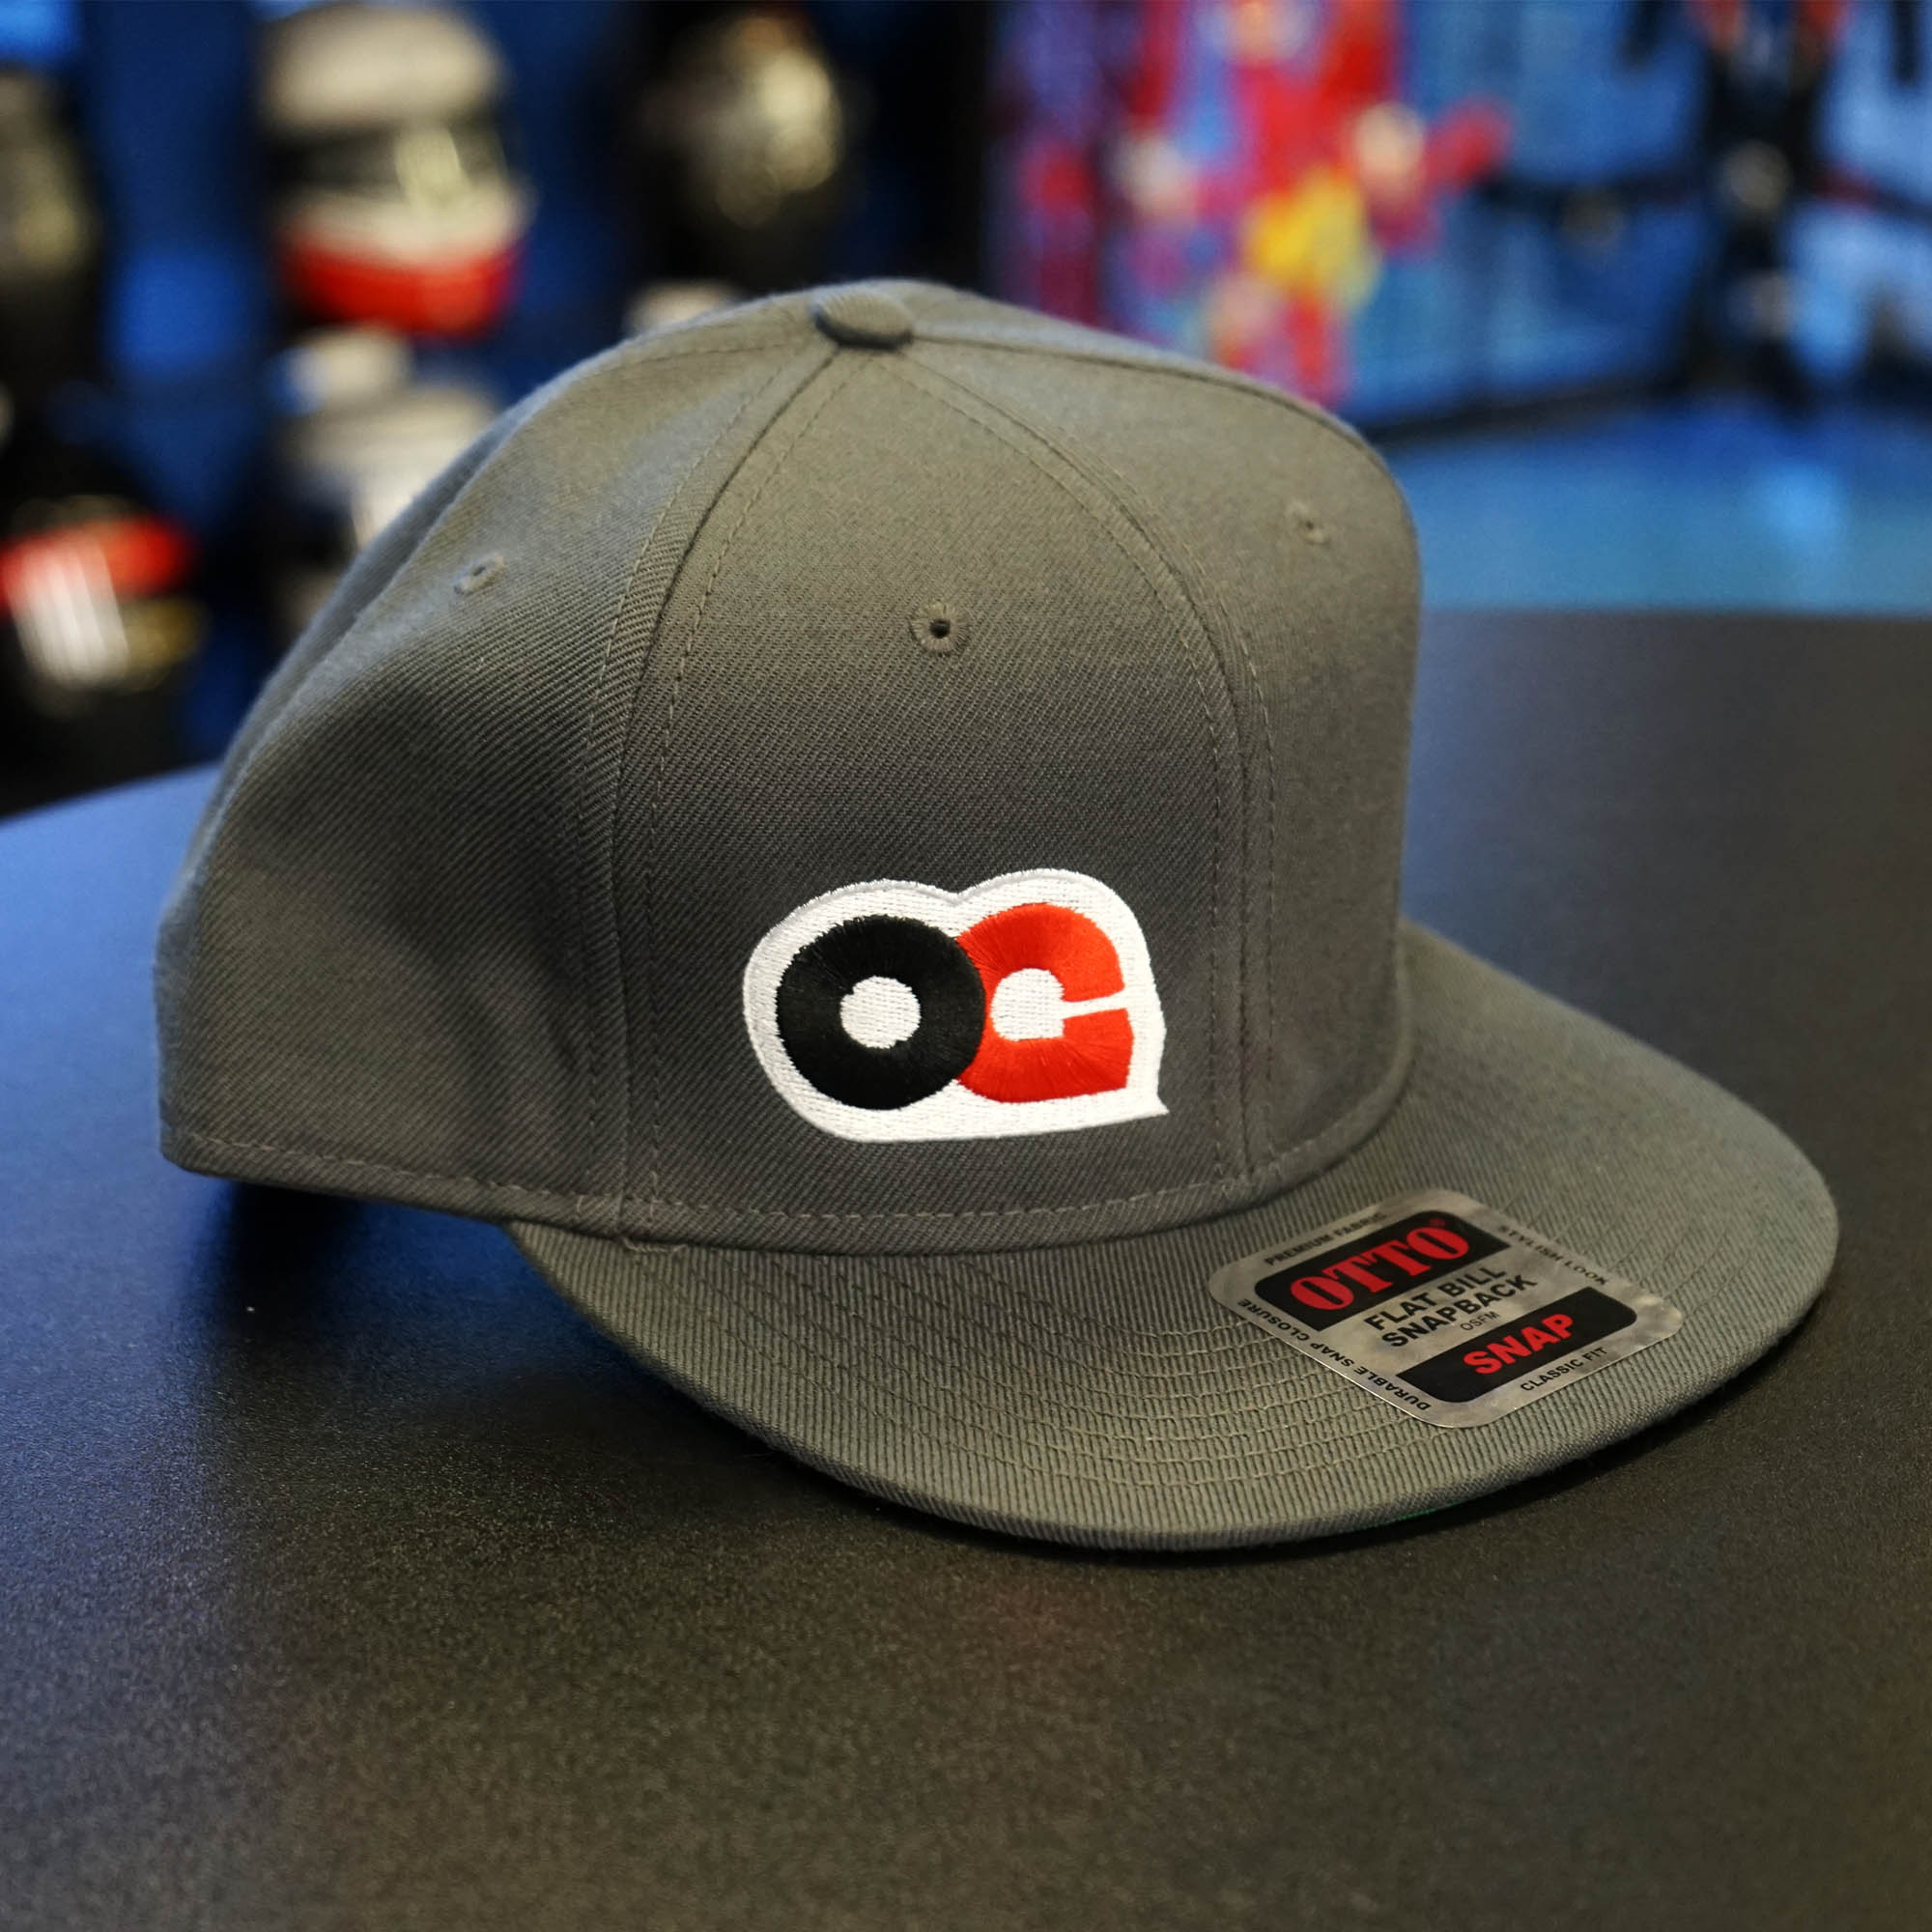 OG Racing Flat-Brim Hat